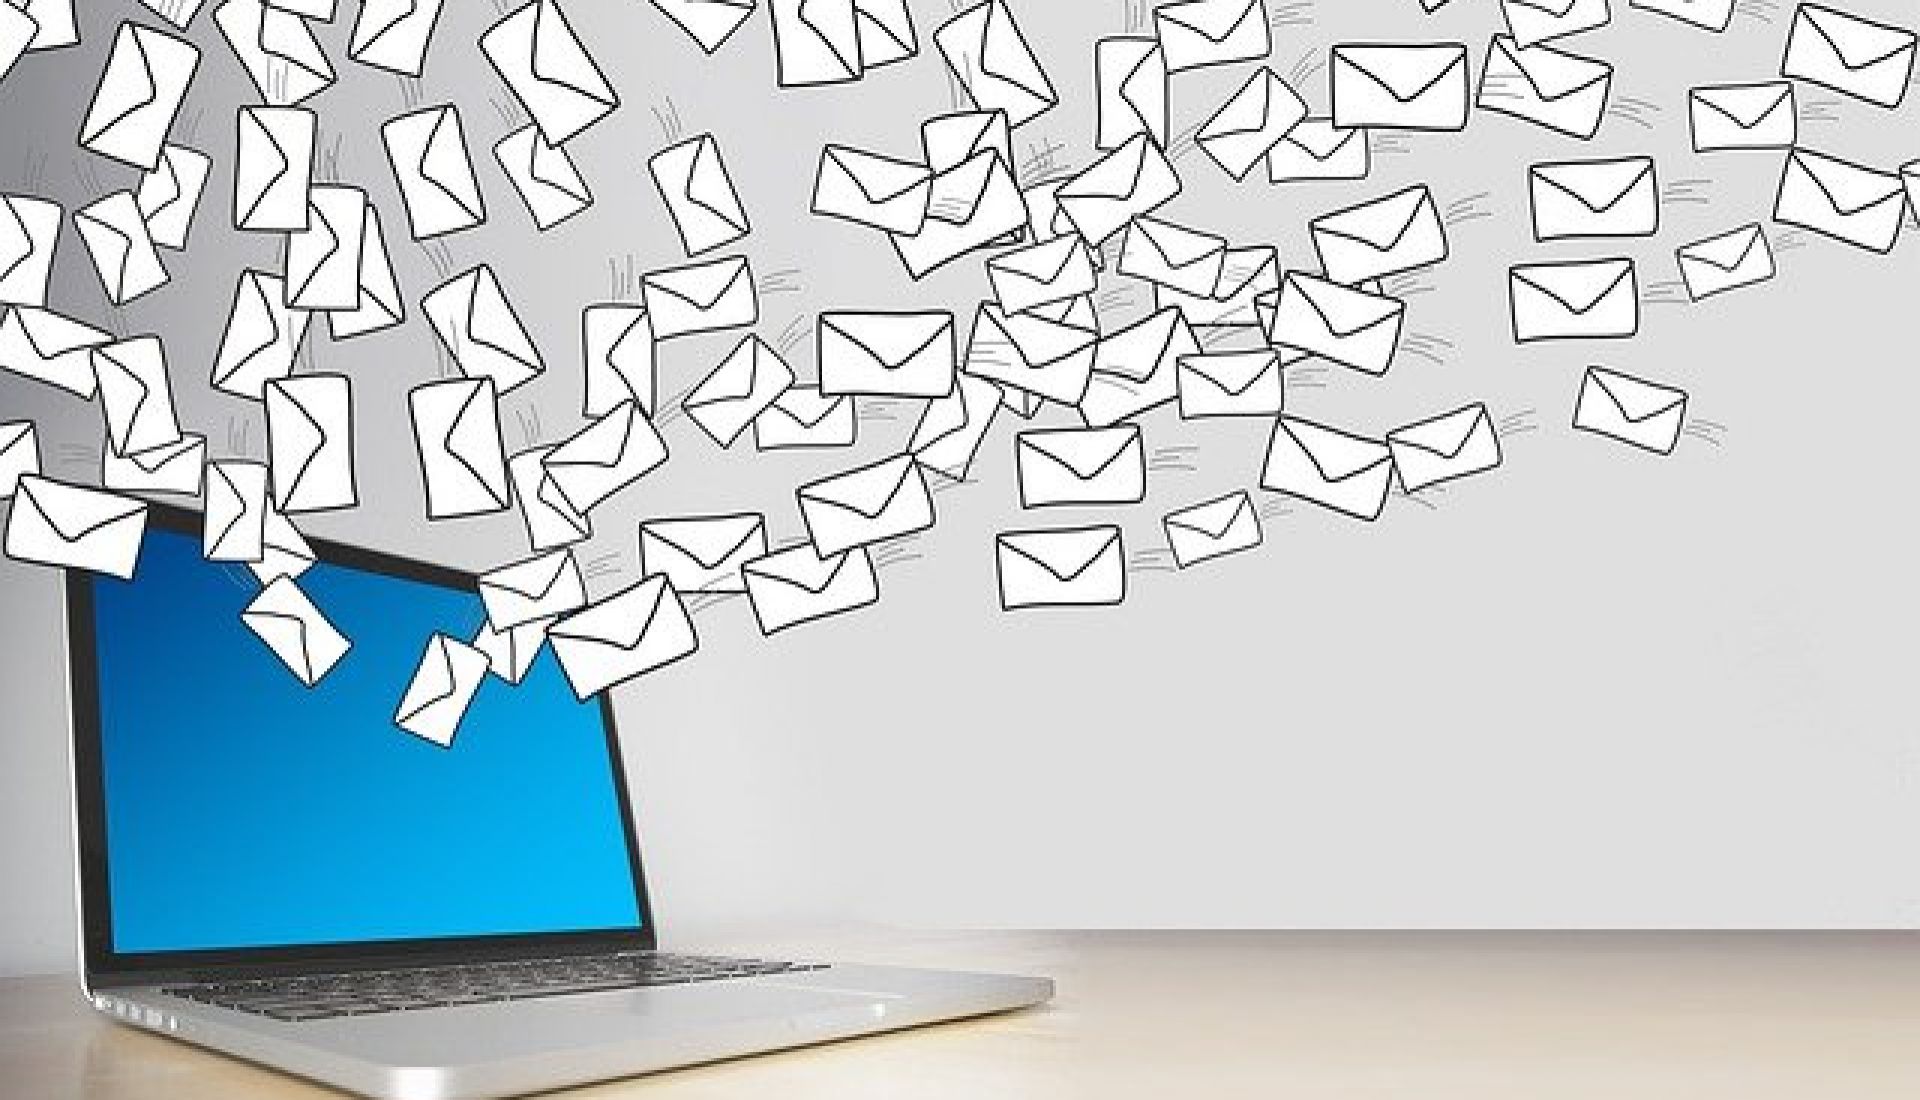 Envoyer recevoir email - Mise en pratique